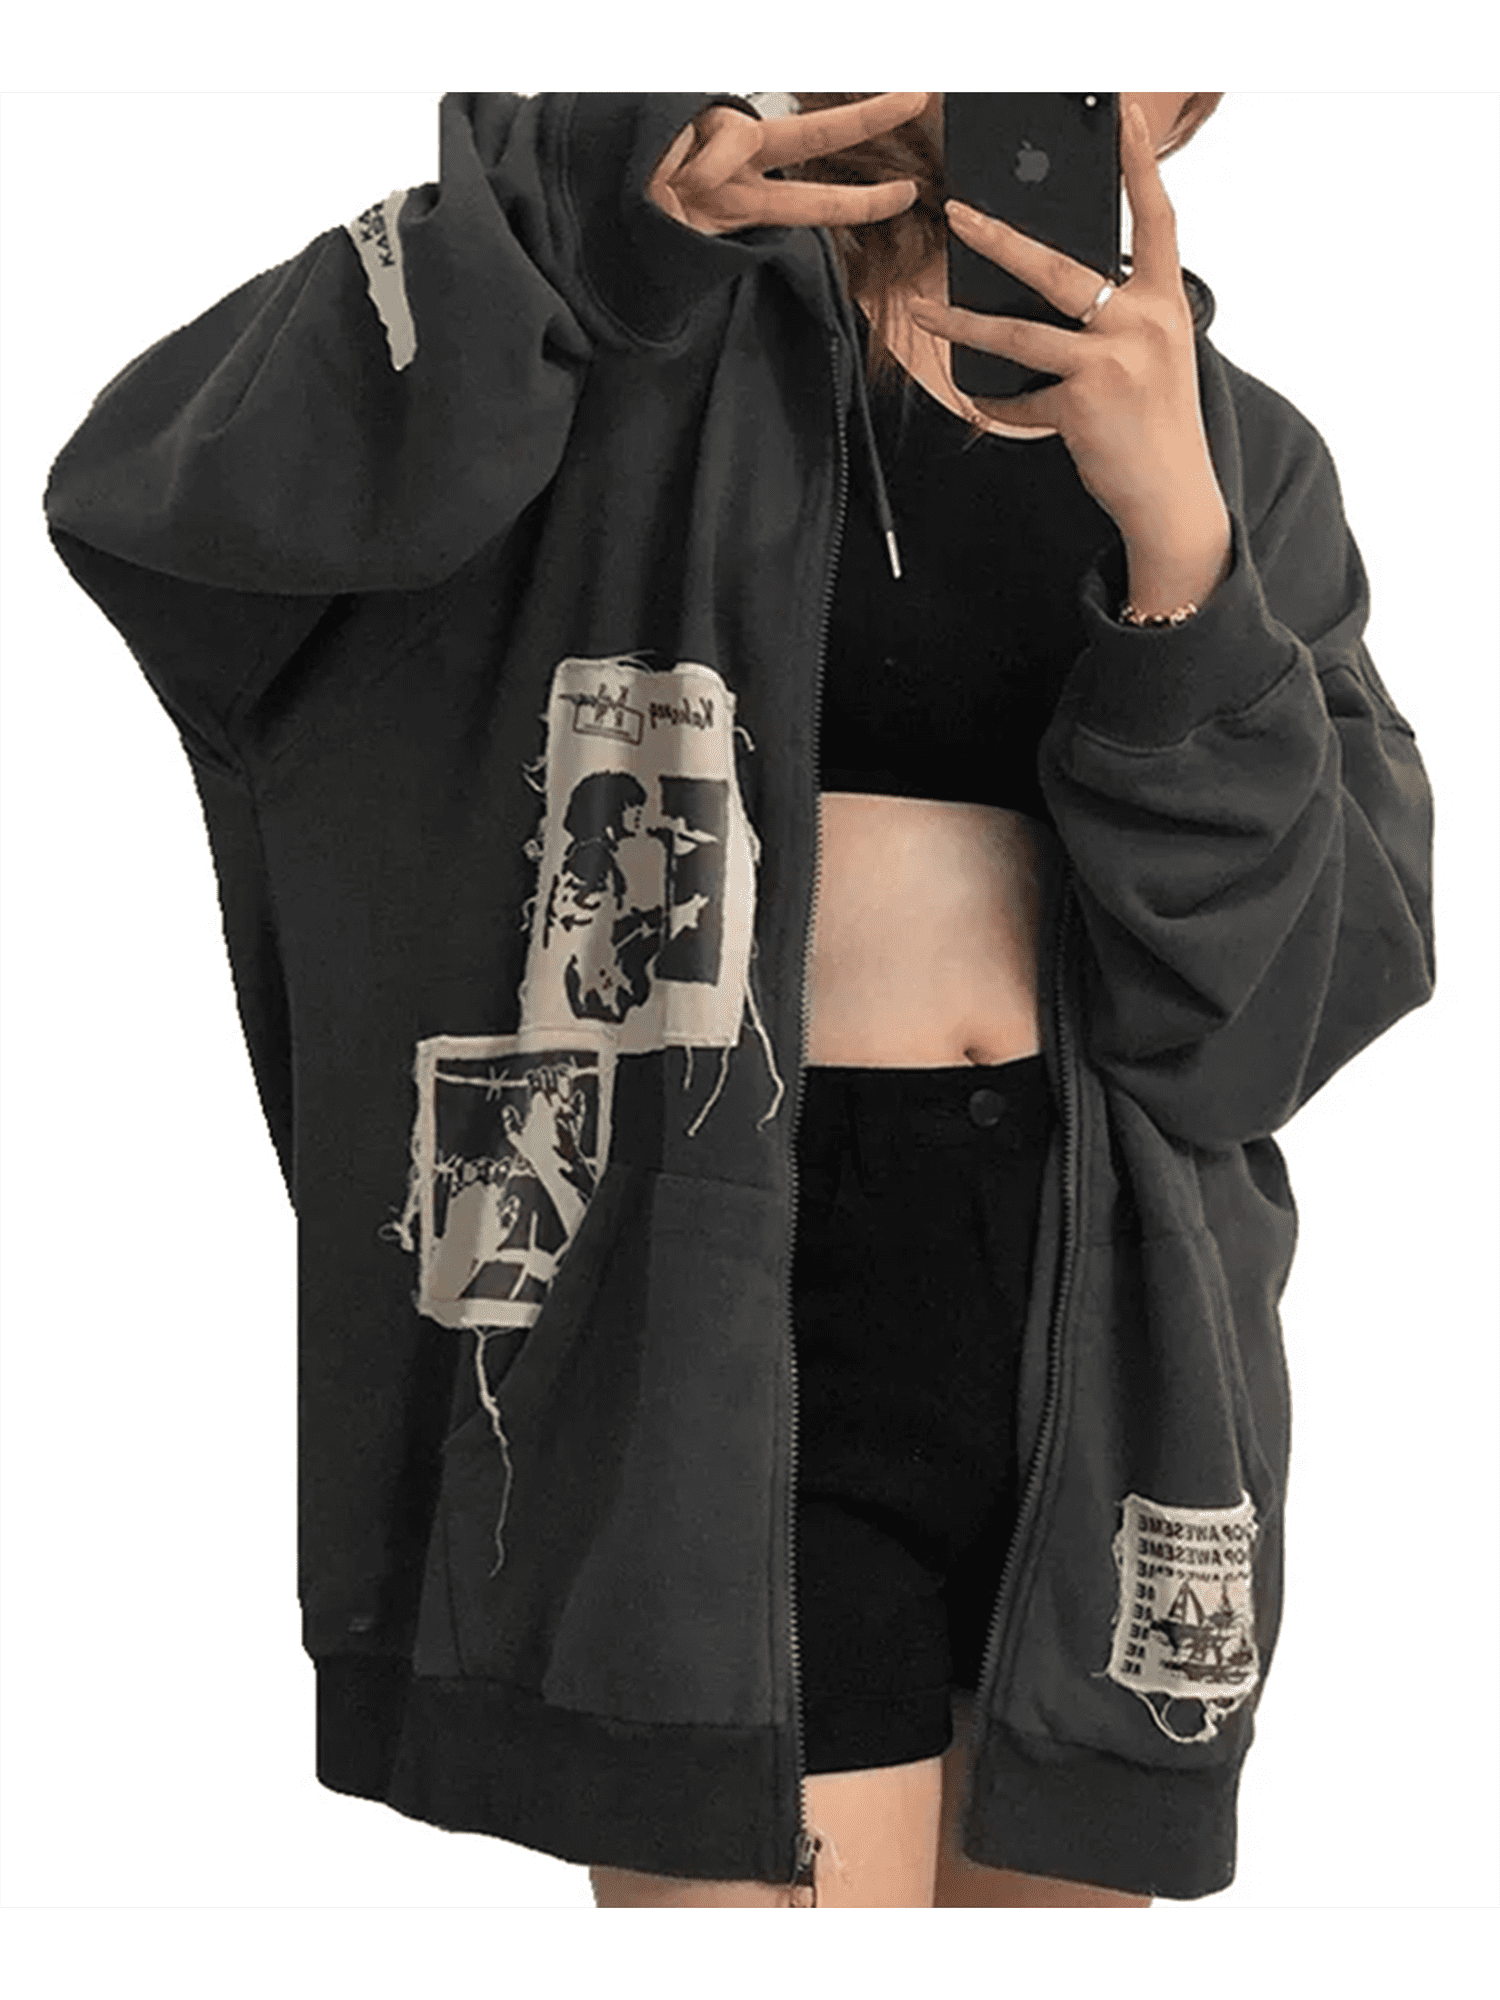 LisenraIn Women Vintage Patch Hoodie Zip Up Hip Pop Punk Sport Hooded  Sweatshirt Gothic Jacket